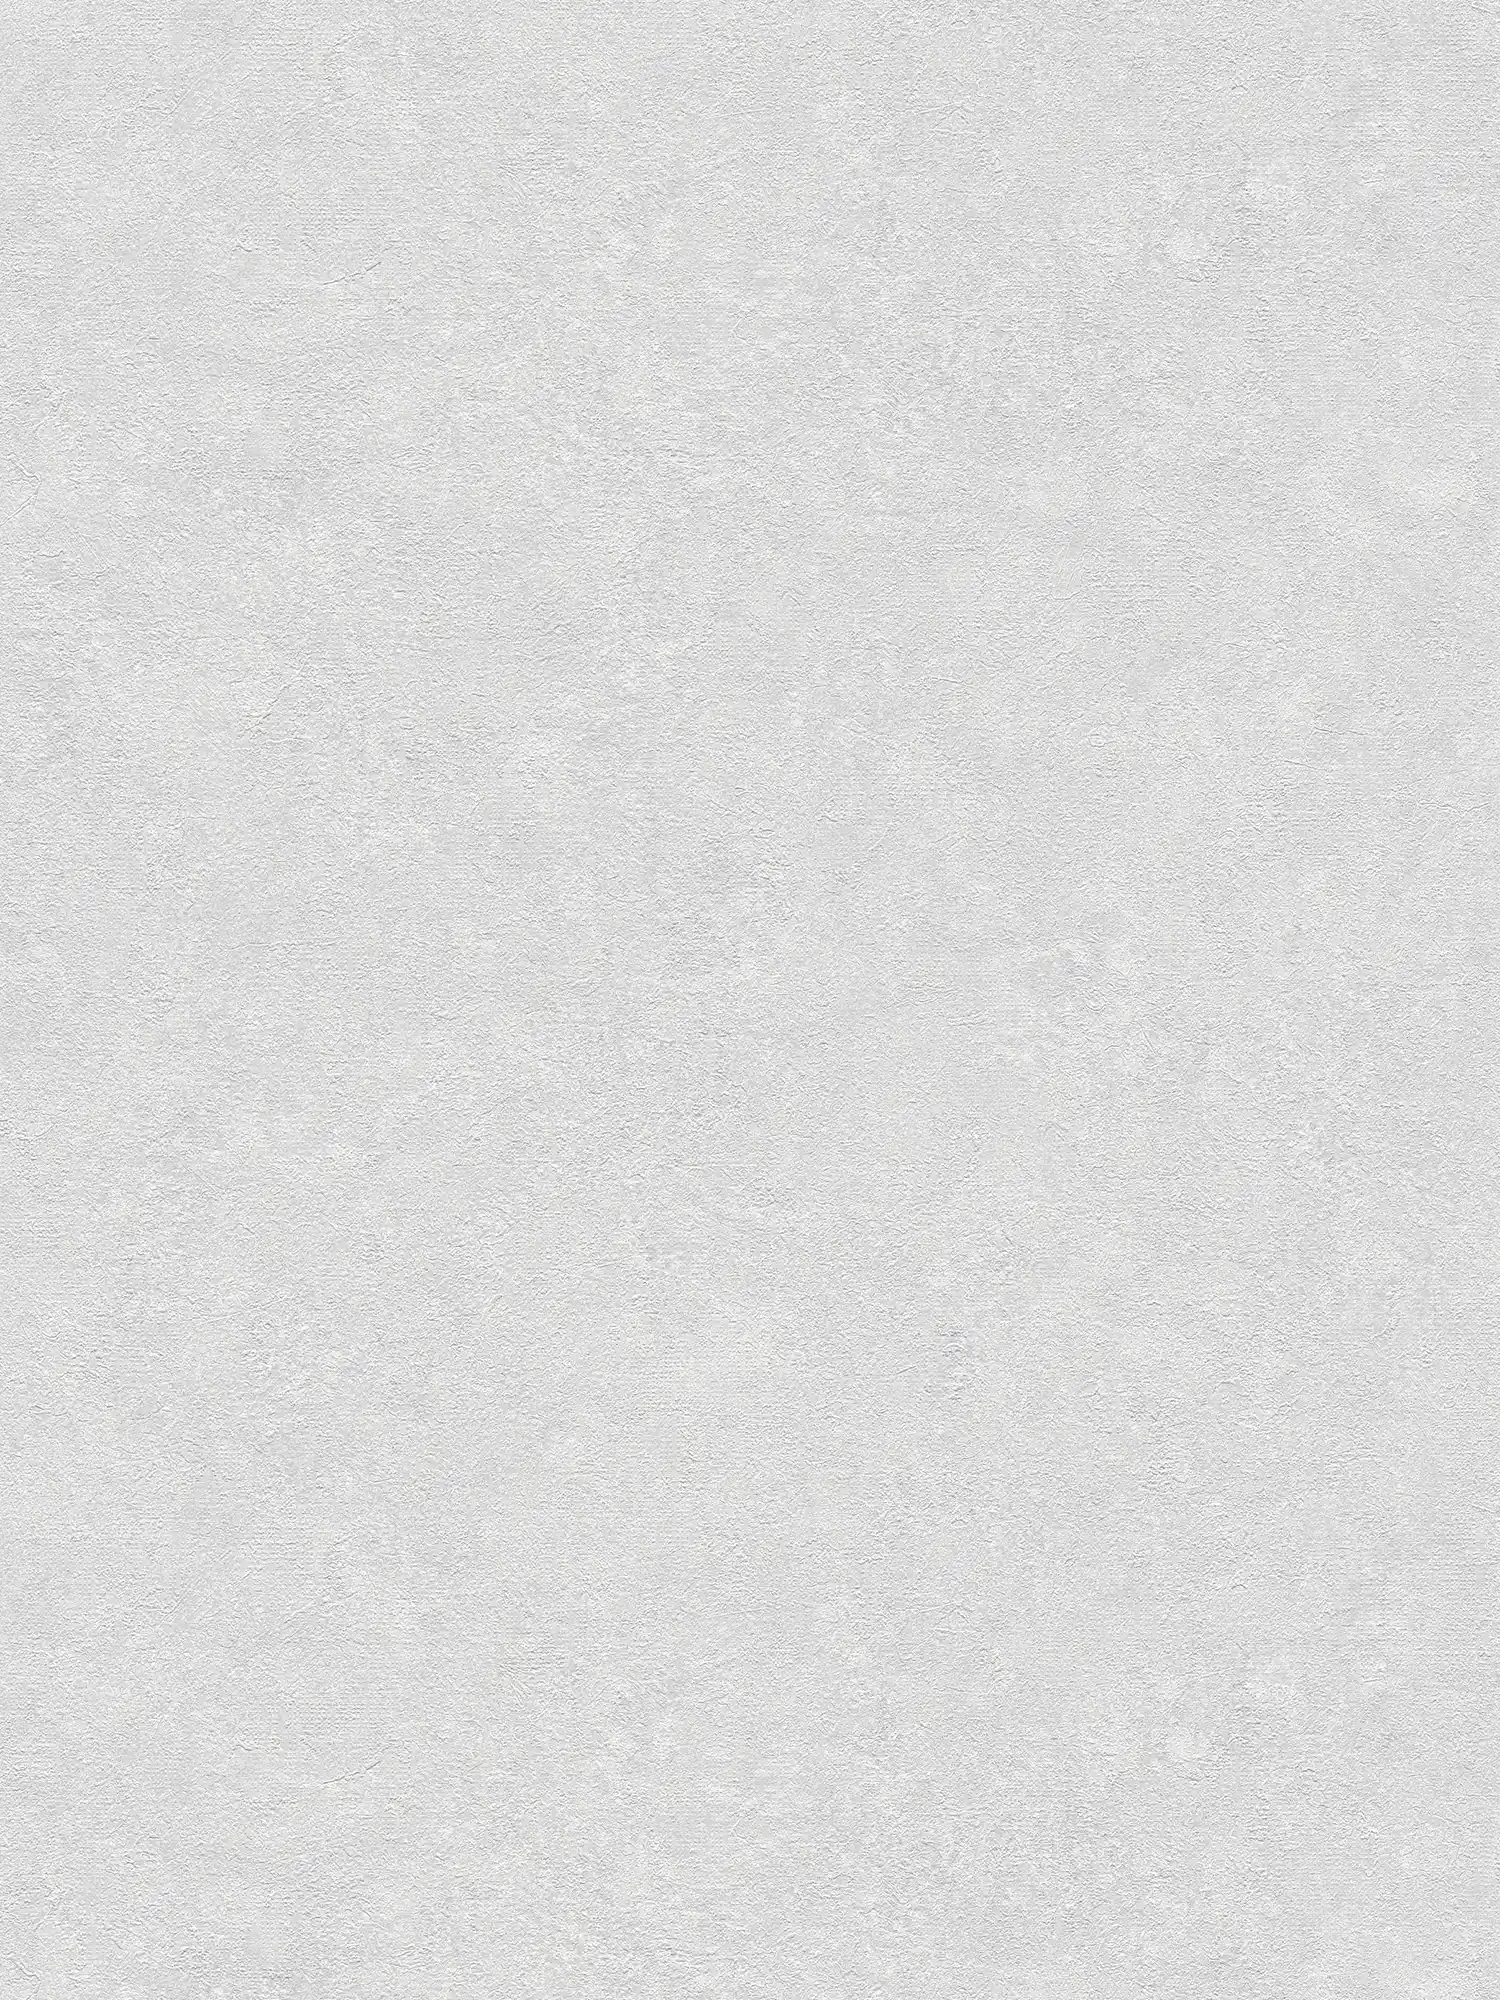         Tapete einfarbig mit Putzoptik – Grau, Weiß
    